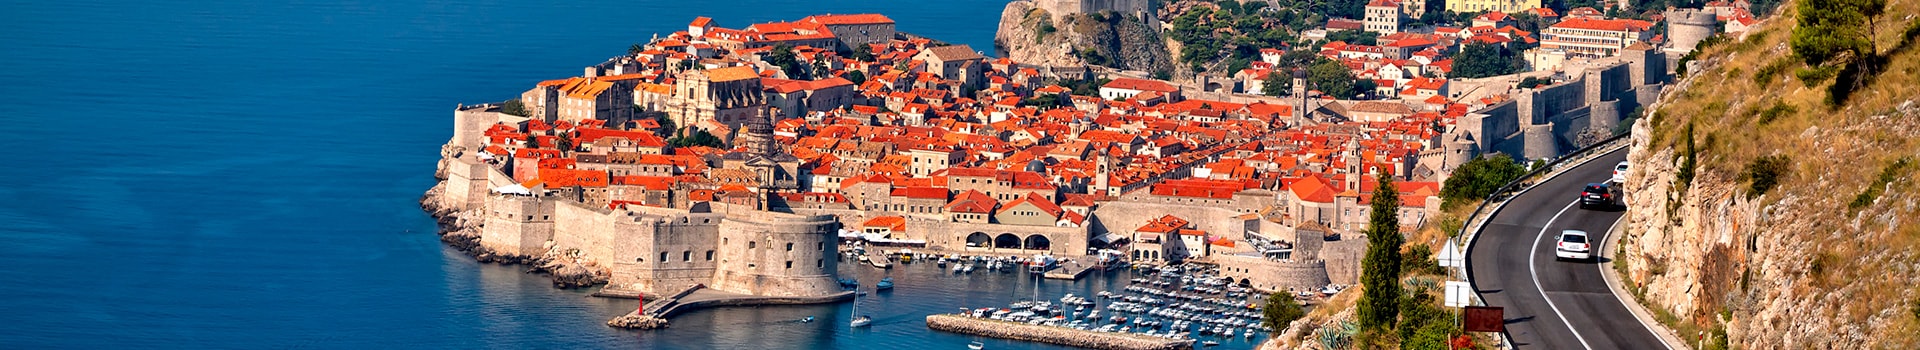 Lisboa - Dubrovnik